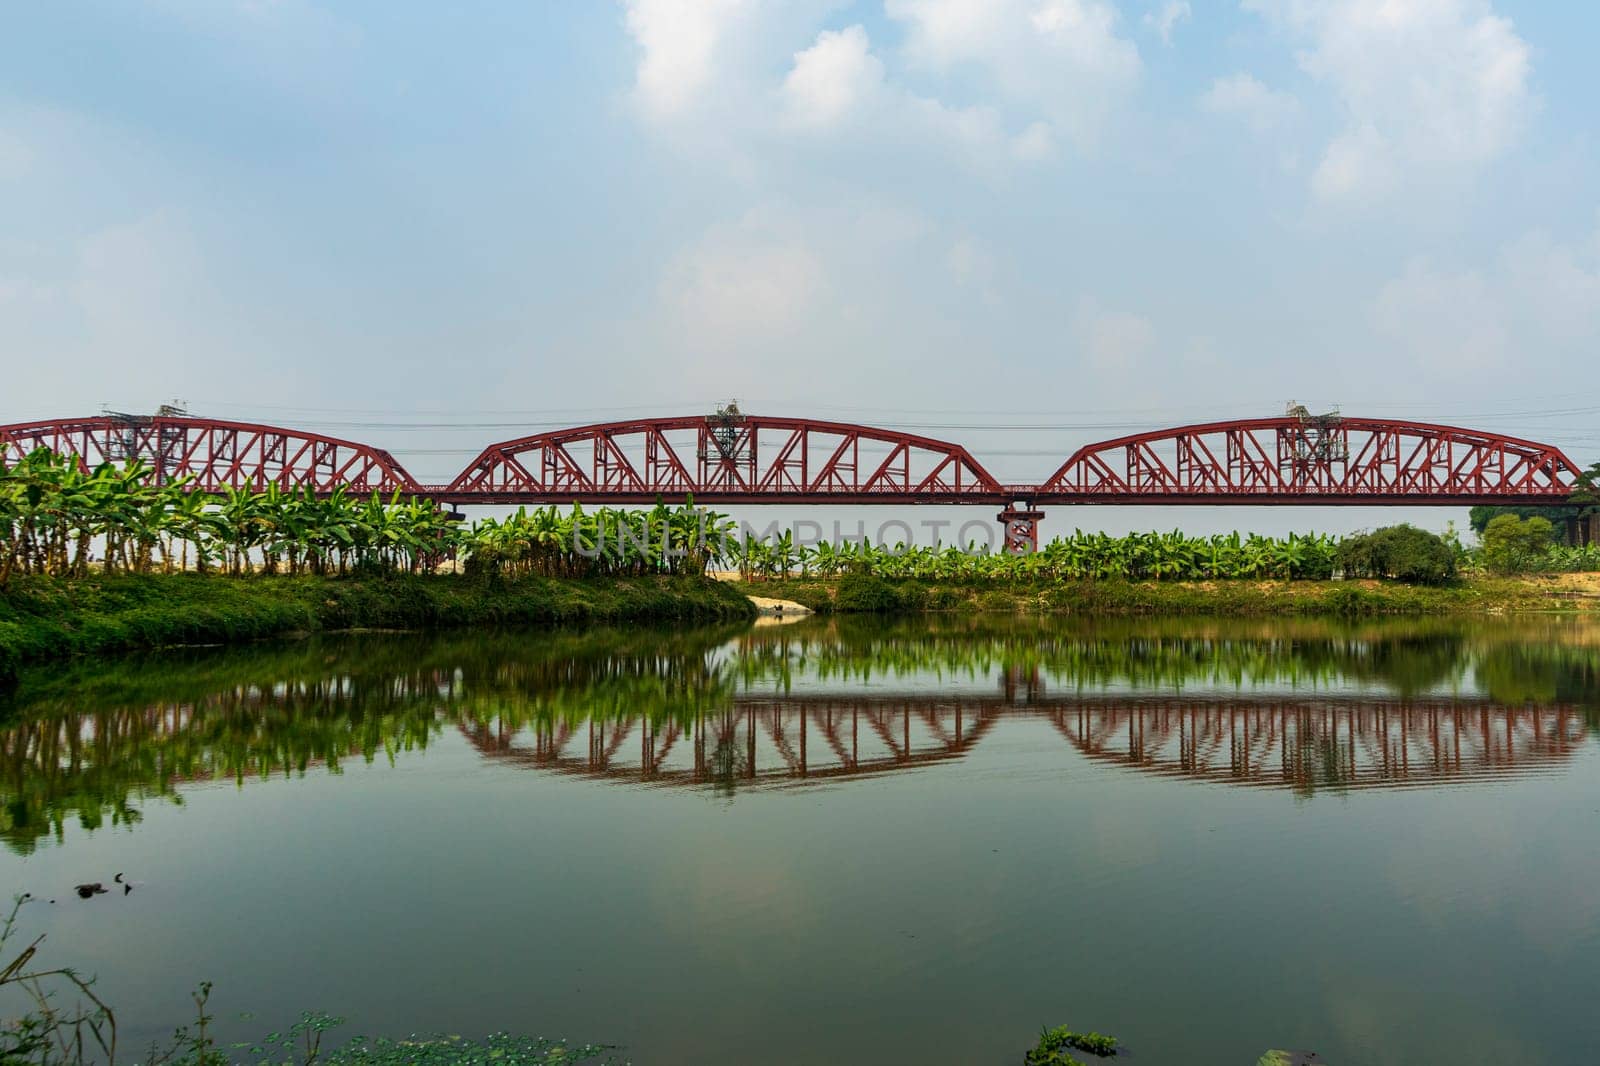 Hardinge Bridge steel railway truss bridge over the Padma River, Bangladesh. by paca-waca